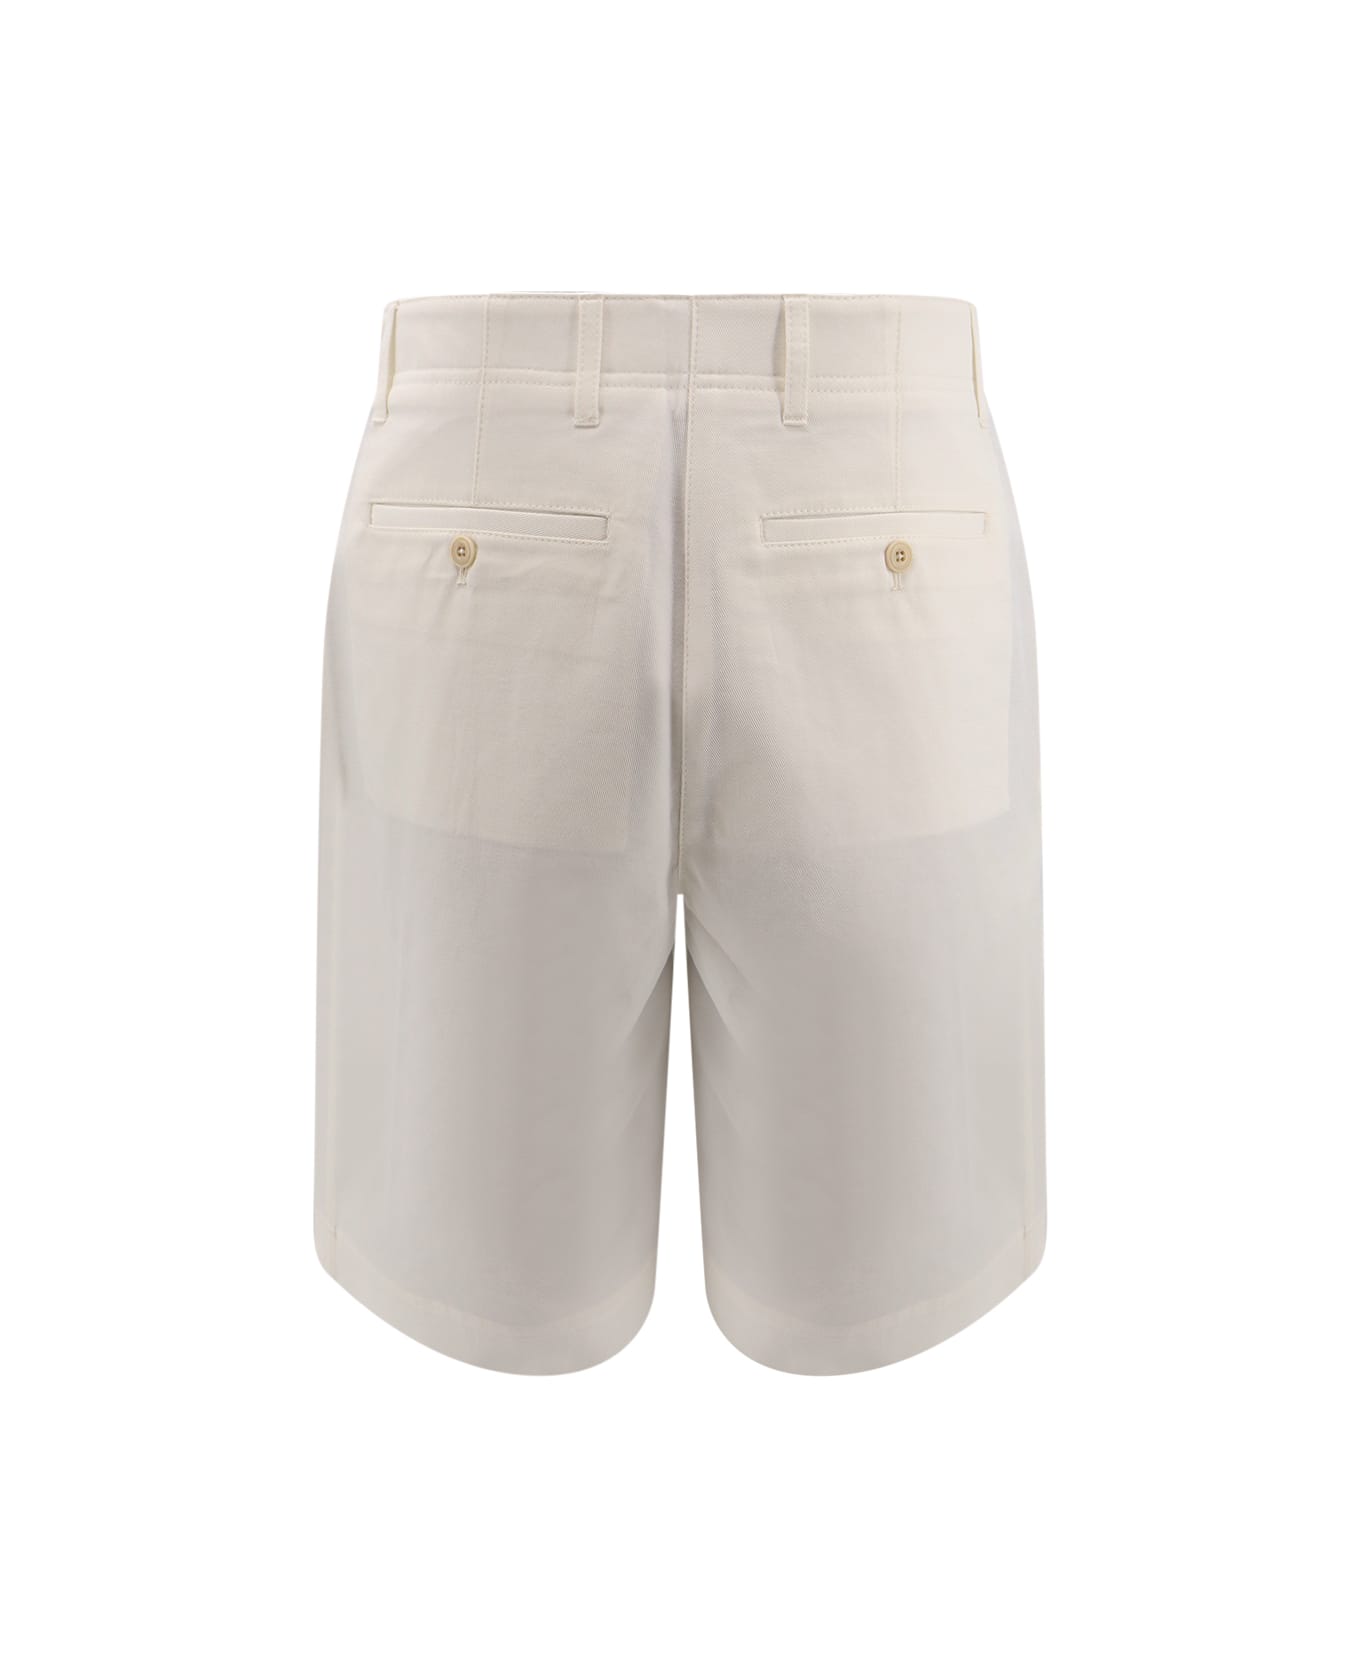 Totême Bermuda Shorts - White